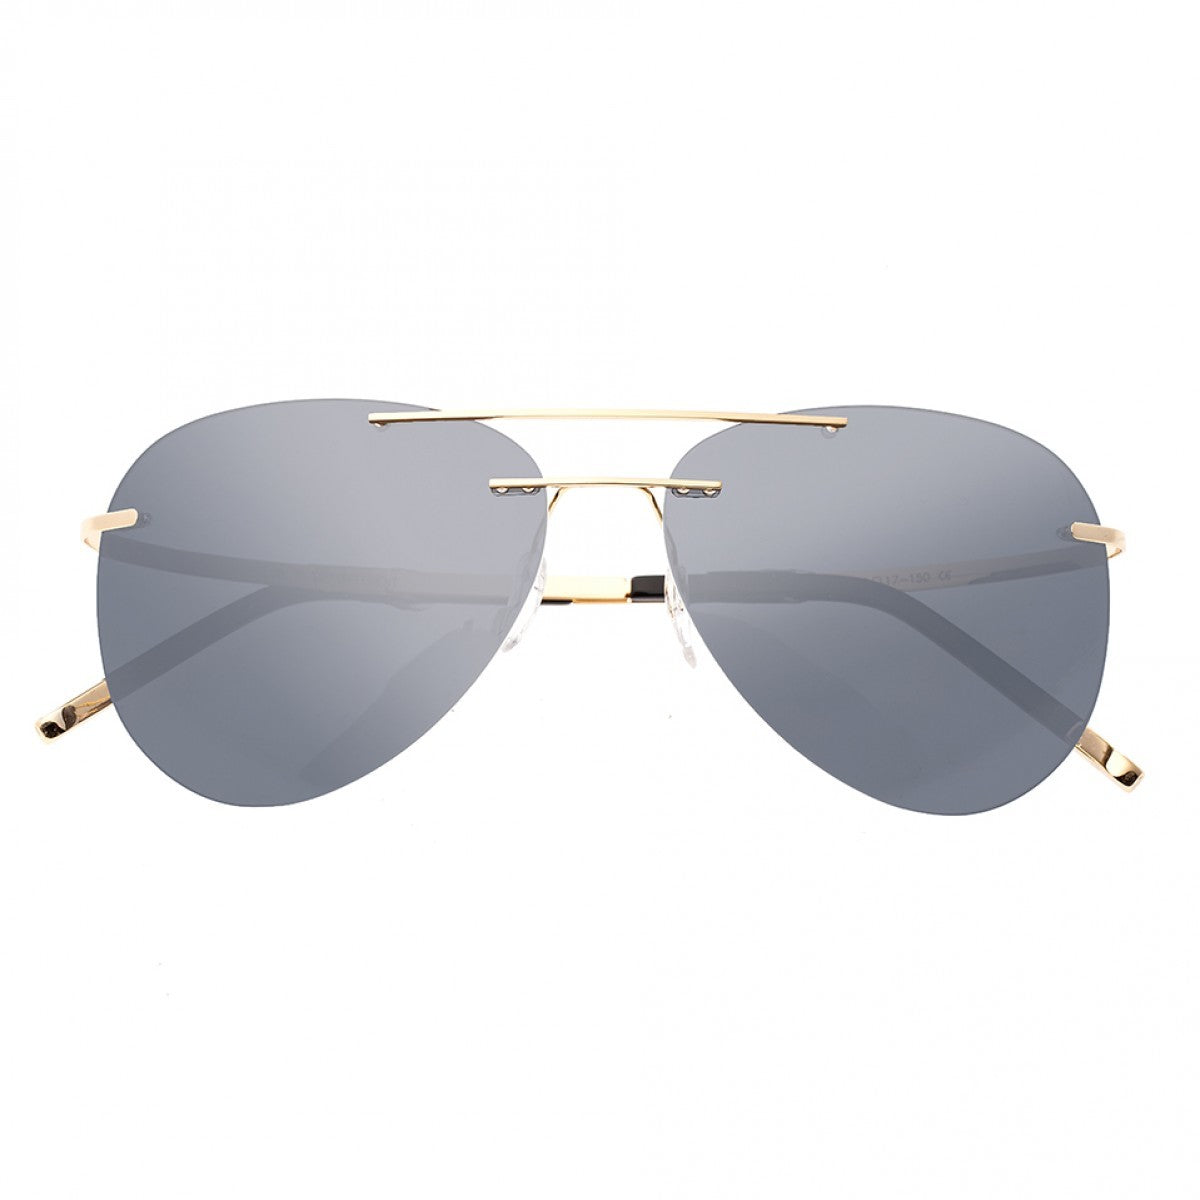 Breed Luna Polarized Sunglasses - Gold/Black - BSG044GD